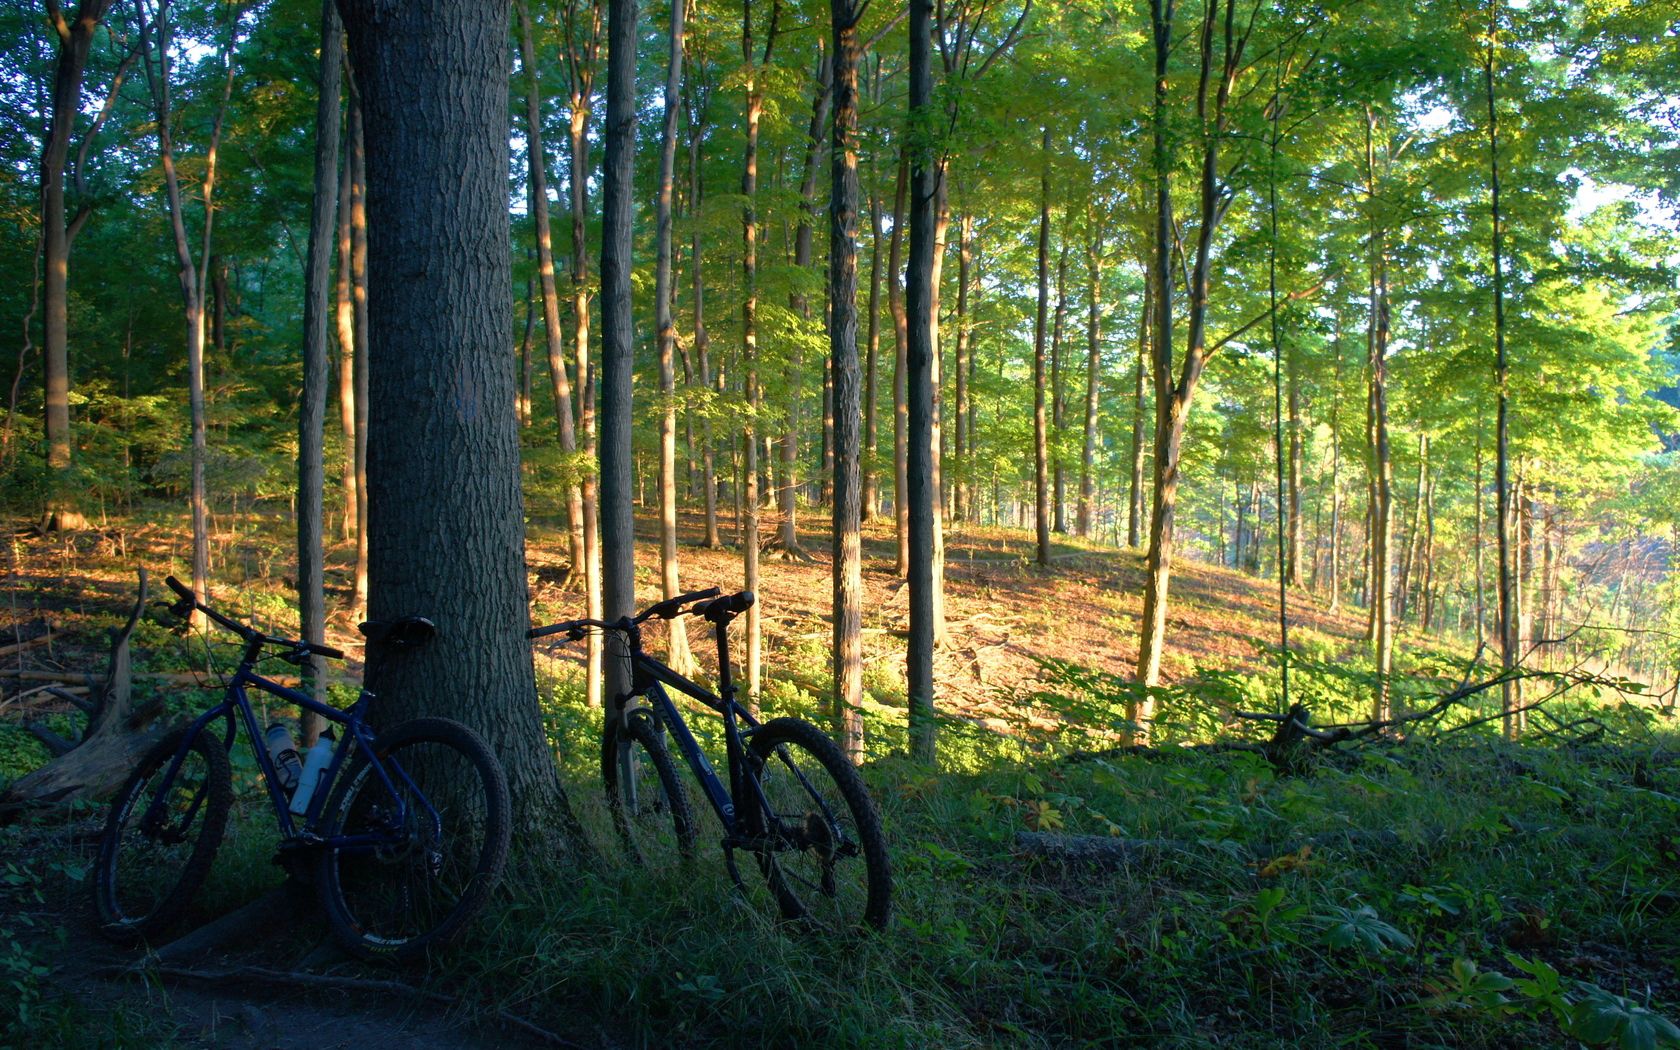 55404 descargar imagen naturaleza, árboles, bicicletas, bosque: fondos de pantalla y protectores de pantalla gratis